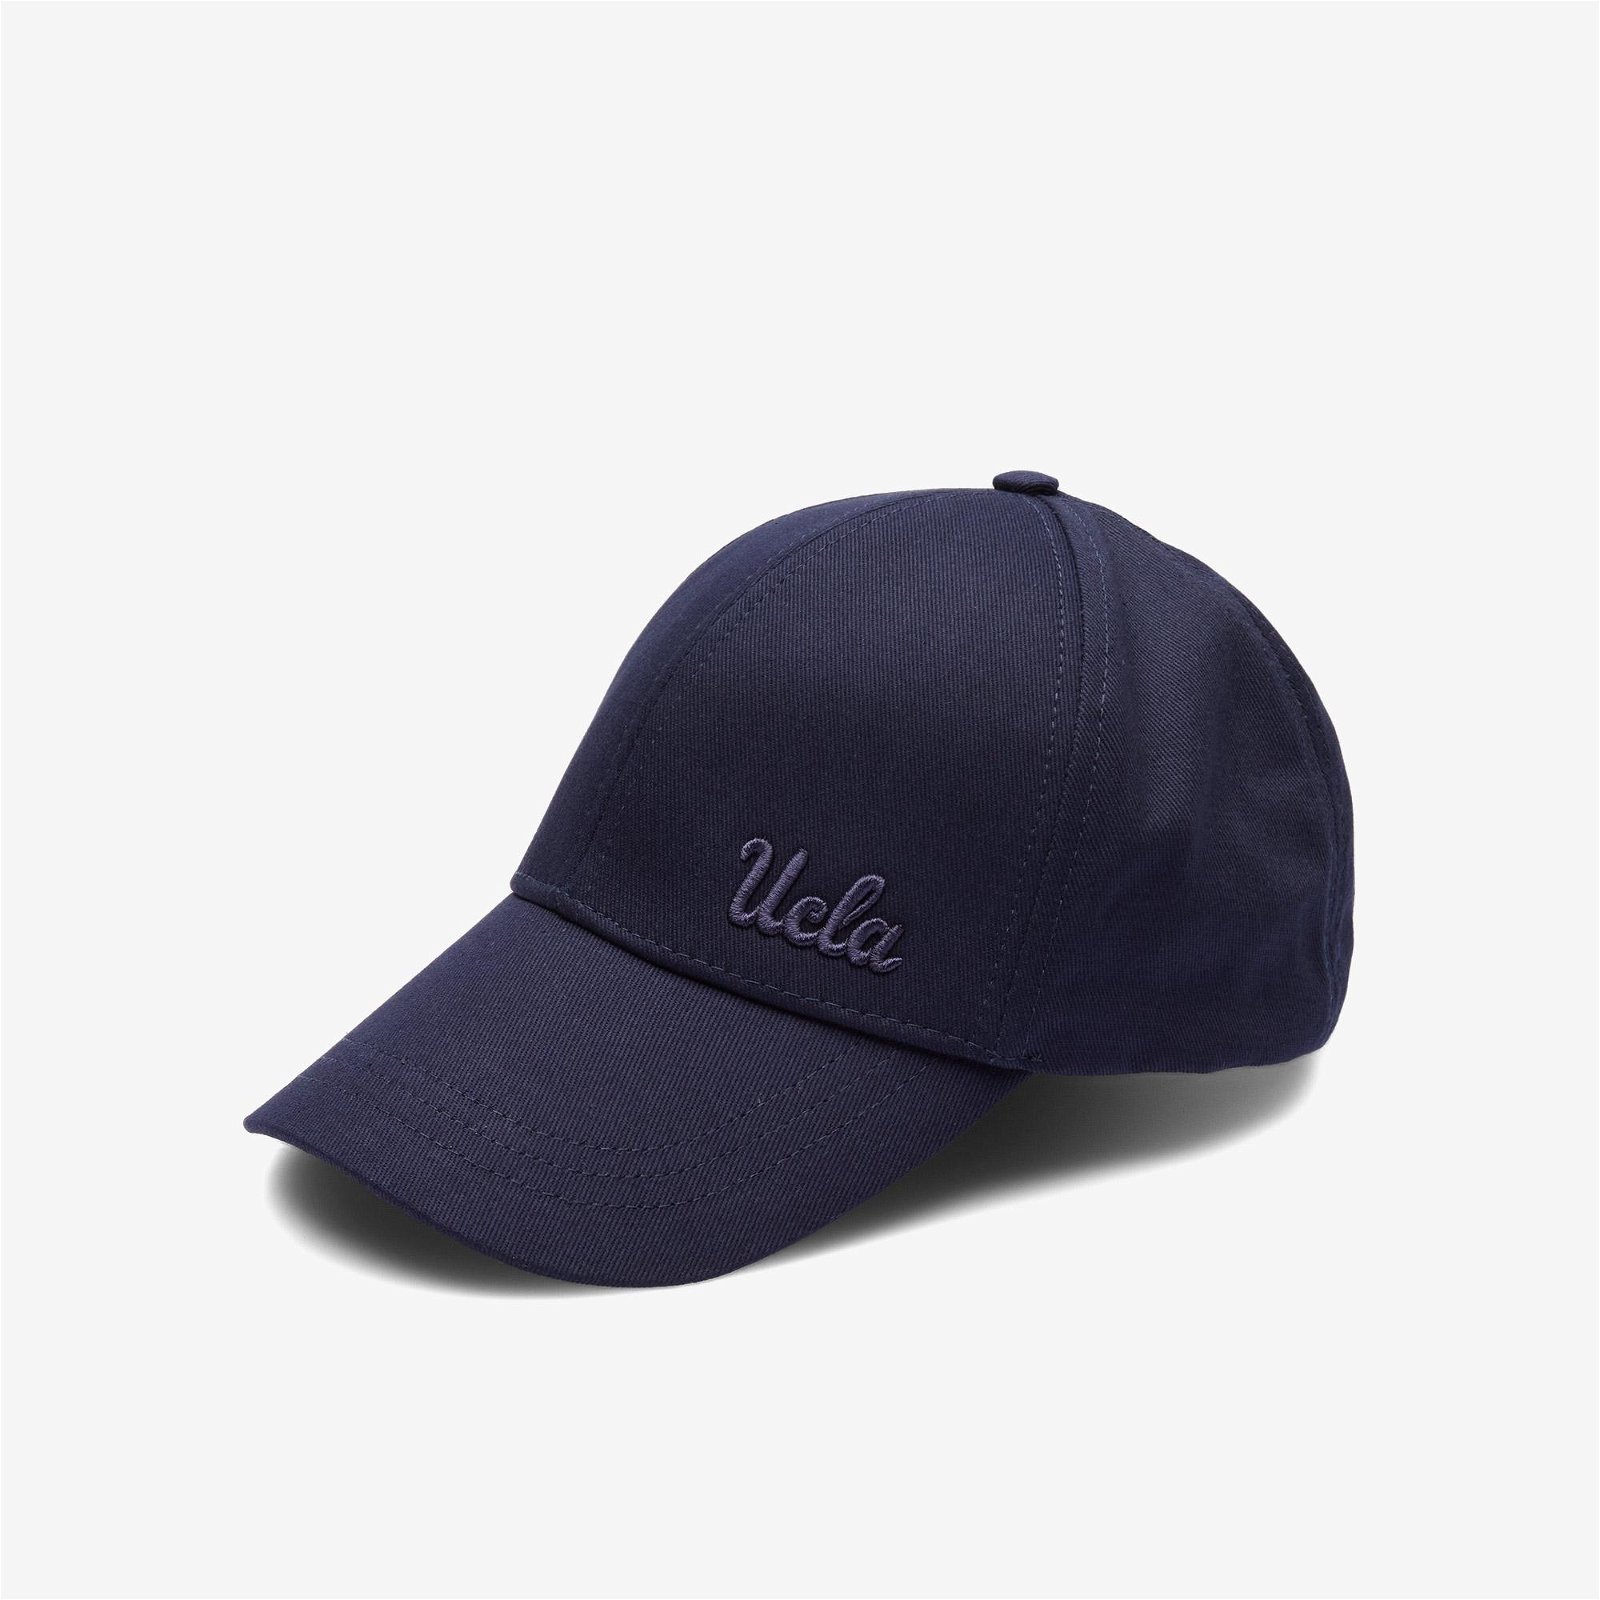 Ucla Neo Unisex Lacivert Şapka